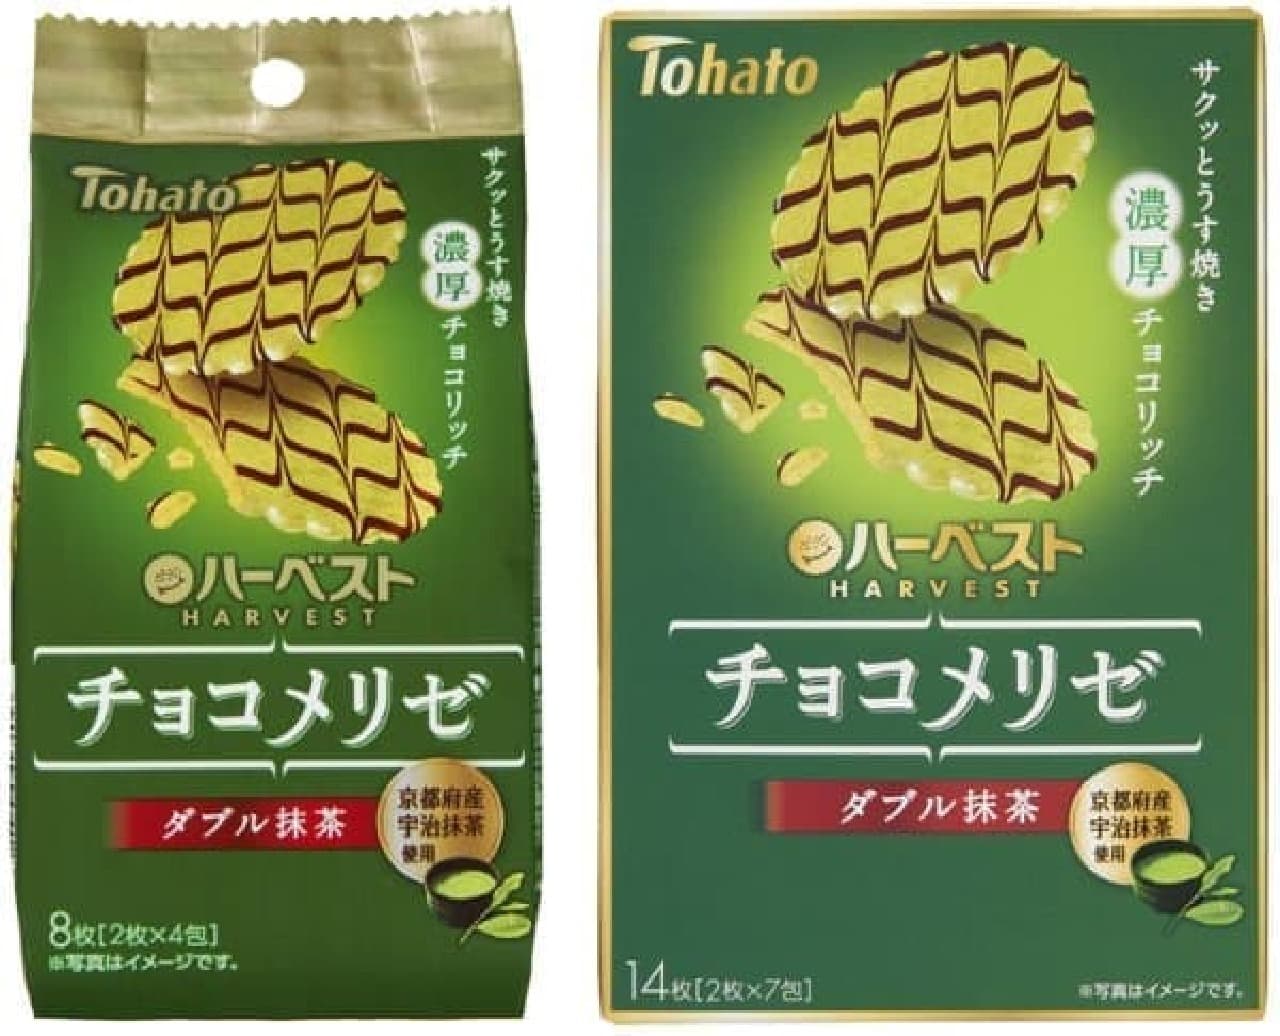 Tohato "Harvest Chocolate Melize Double Matcha"